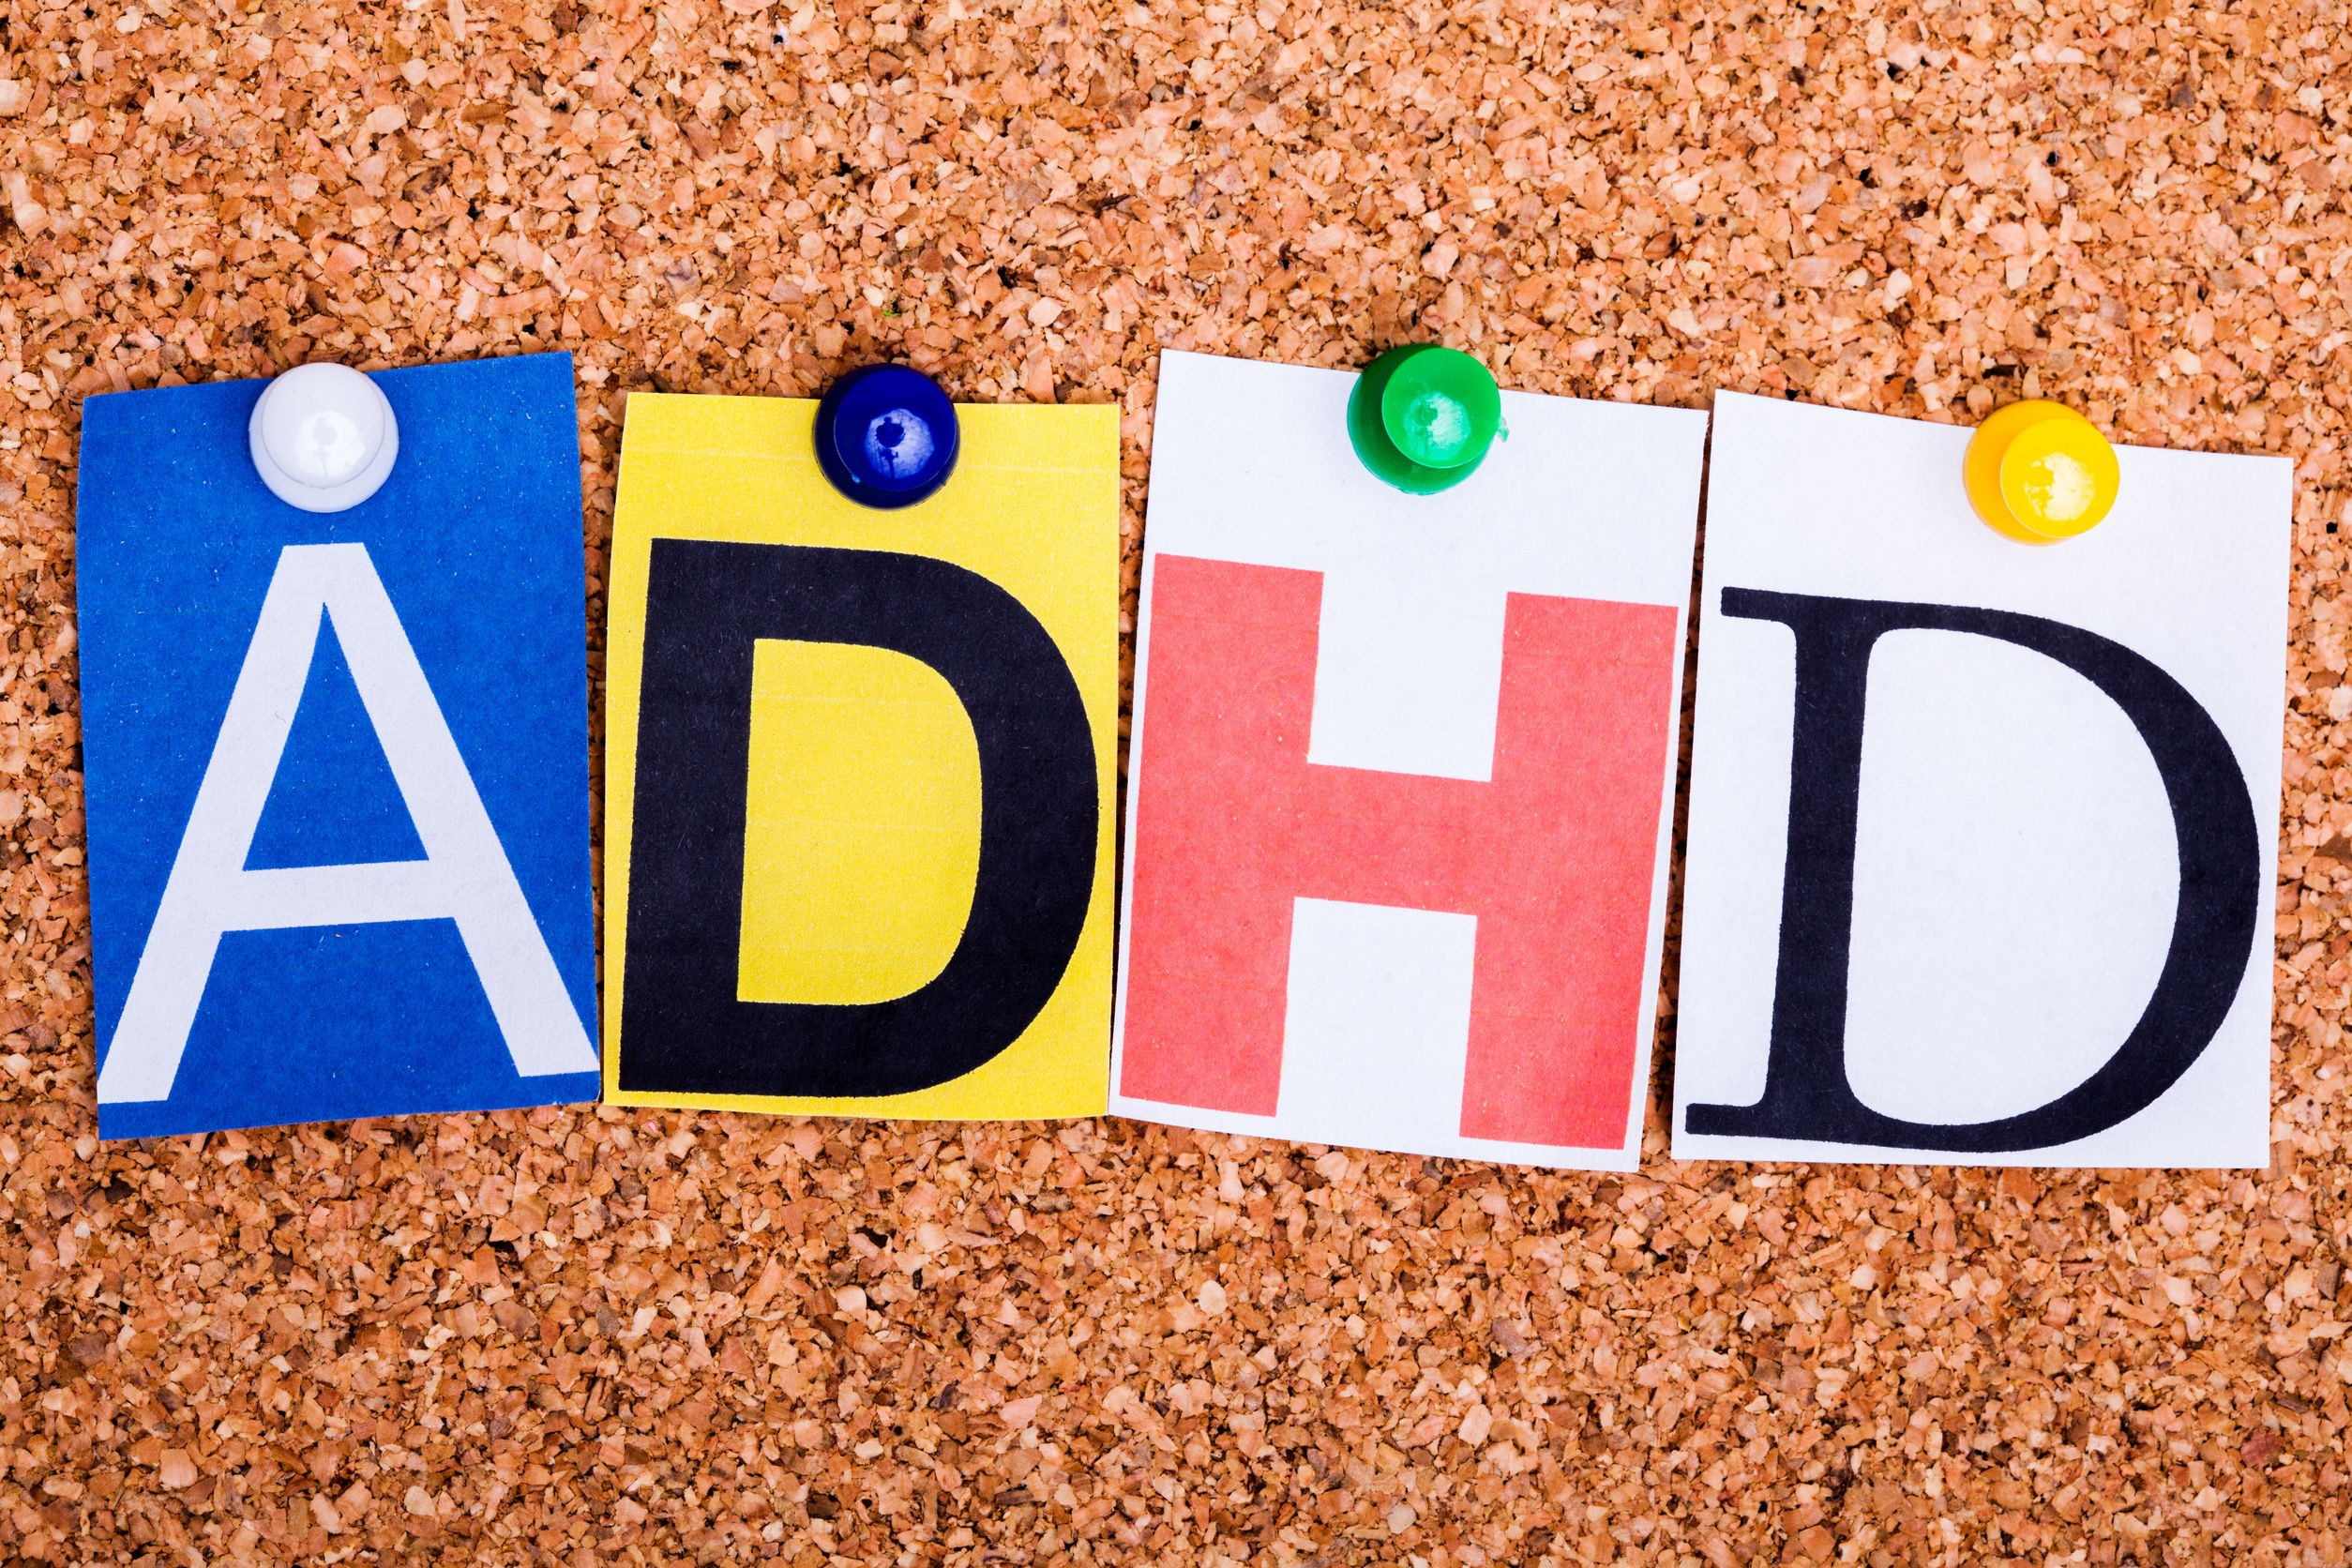 The word ADHD on a bulletin board